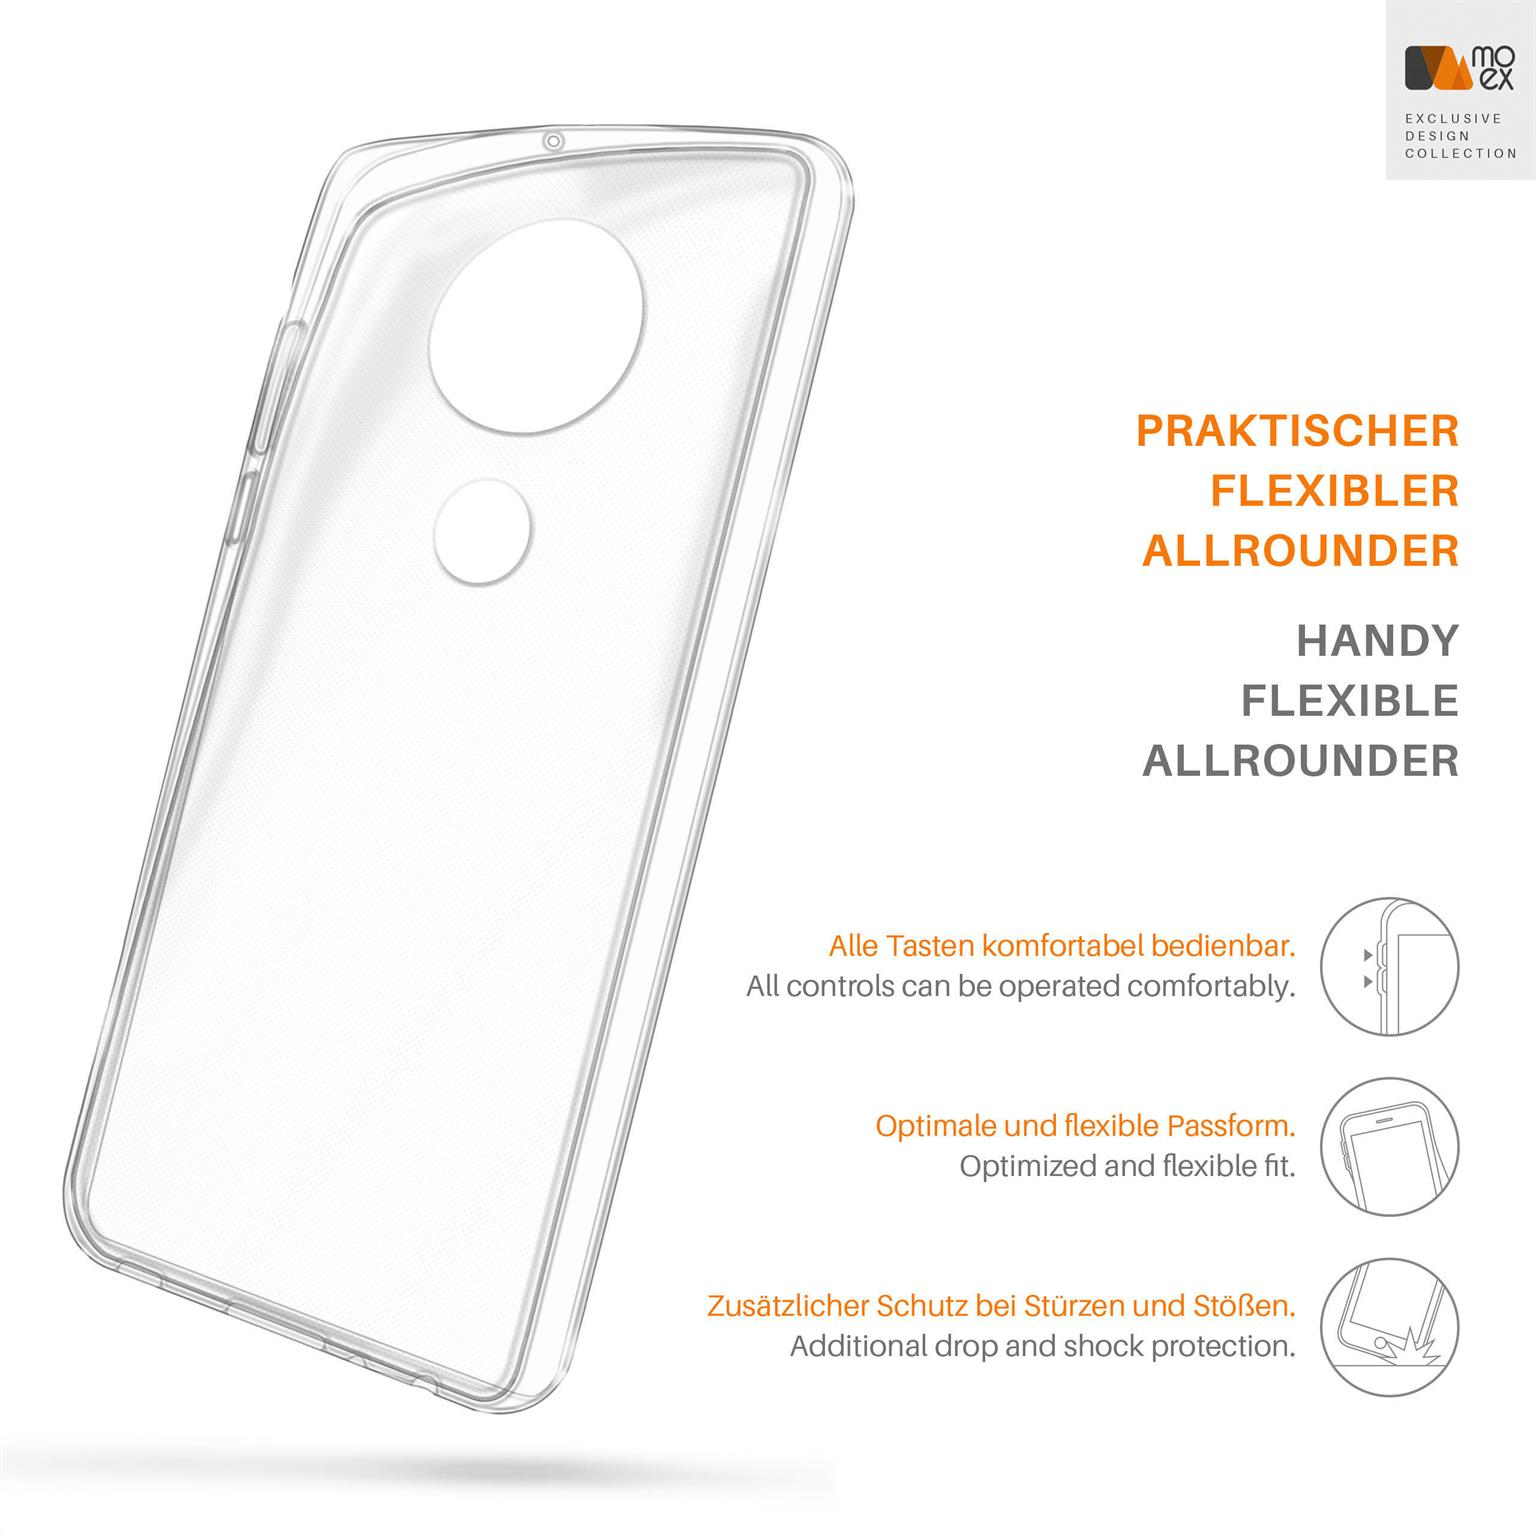 Case, Aero Backcover, Moto MOEX Crystal-Clear Plus, Motorola, G7